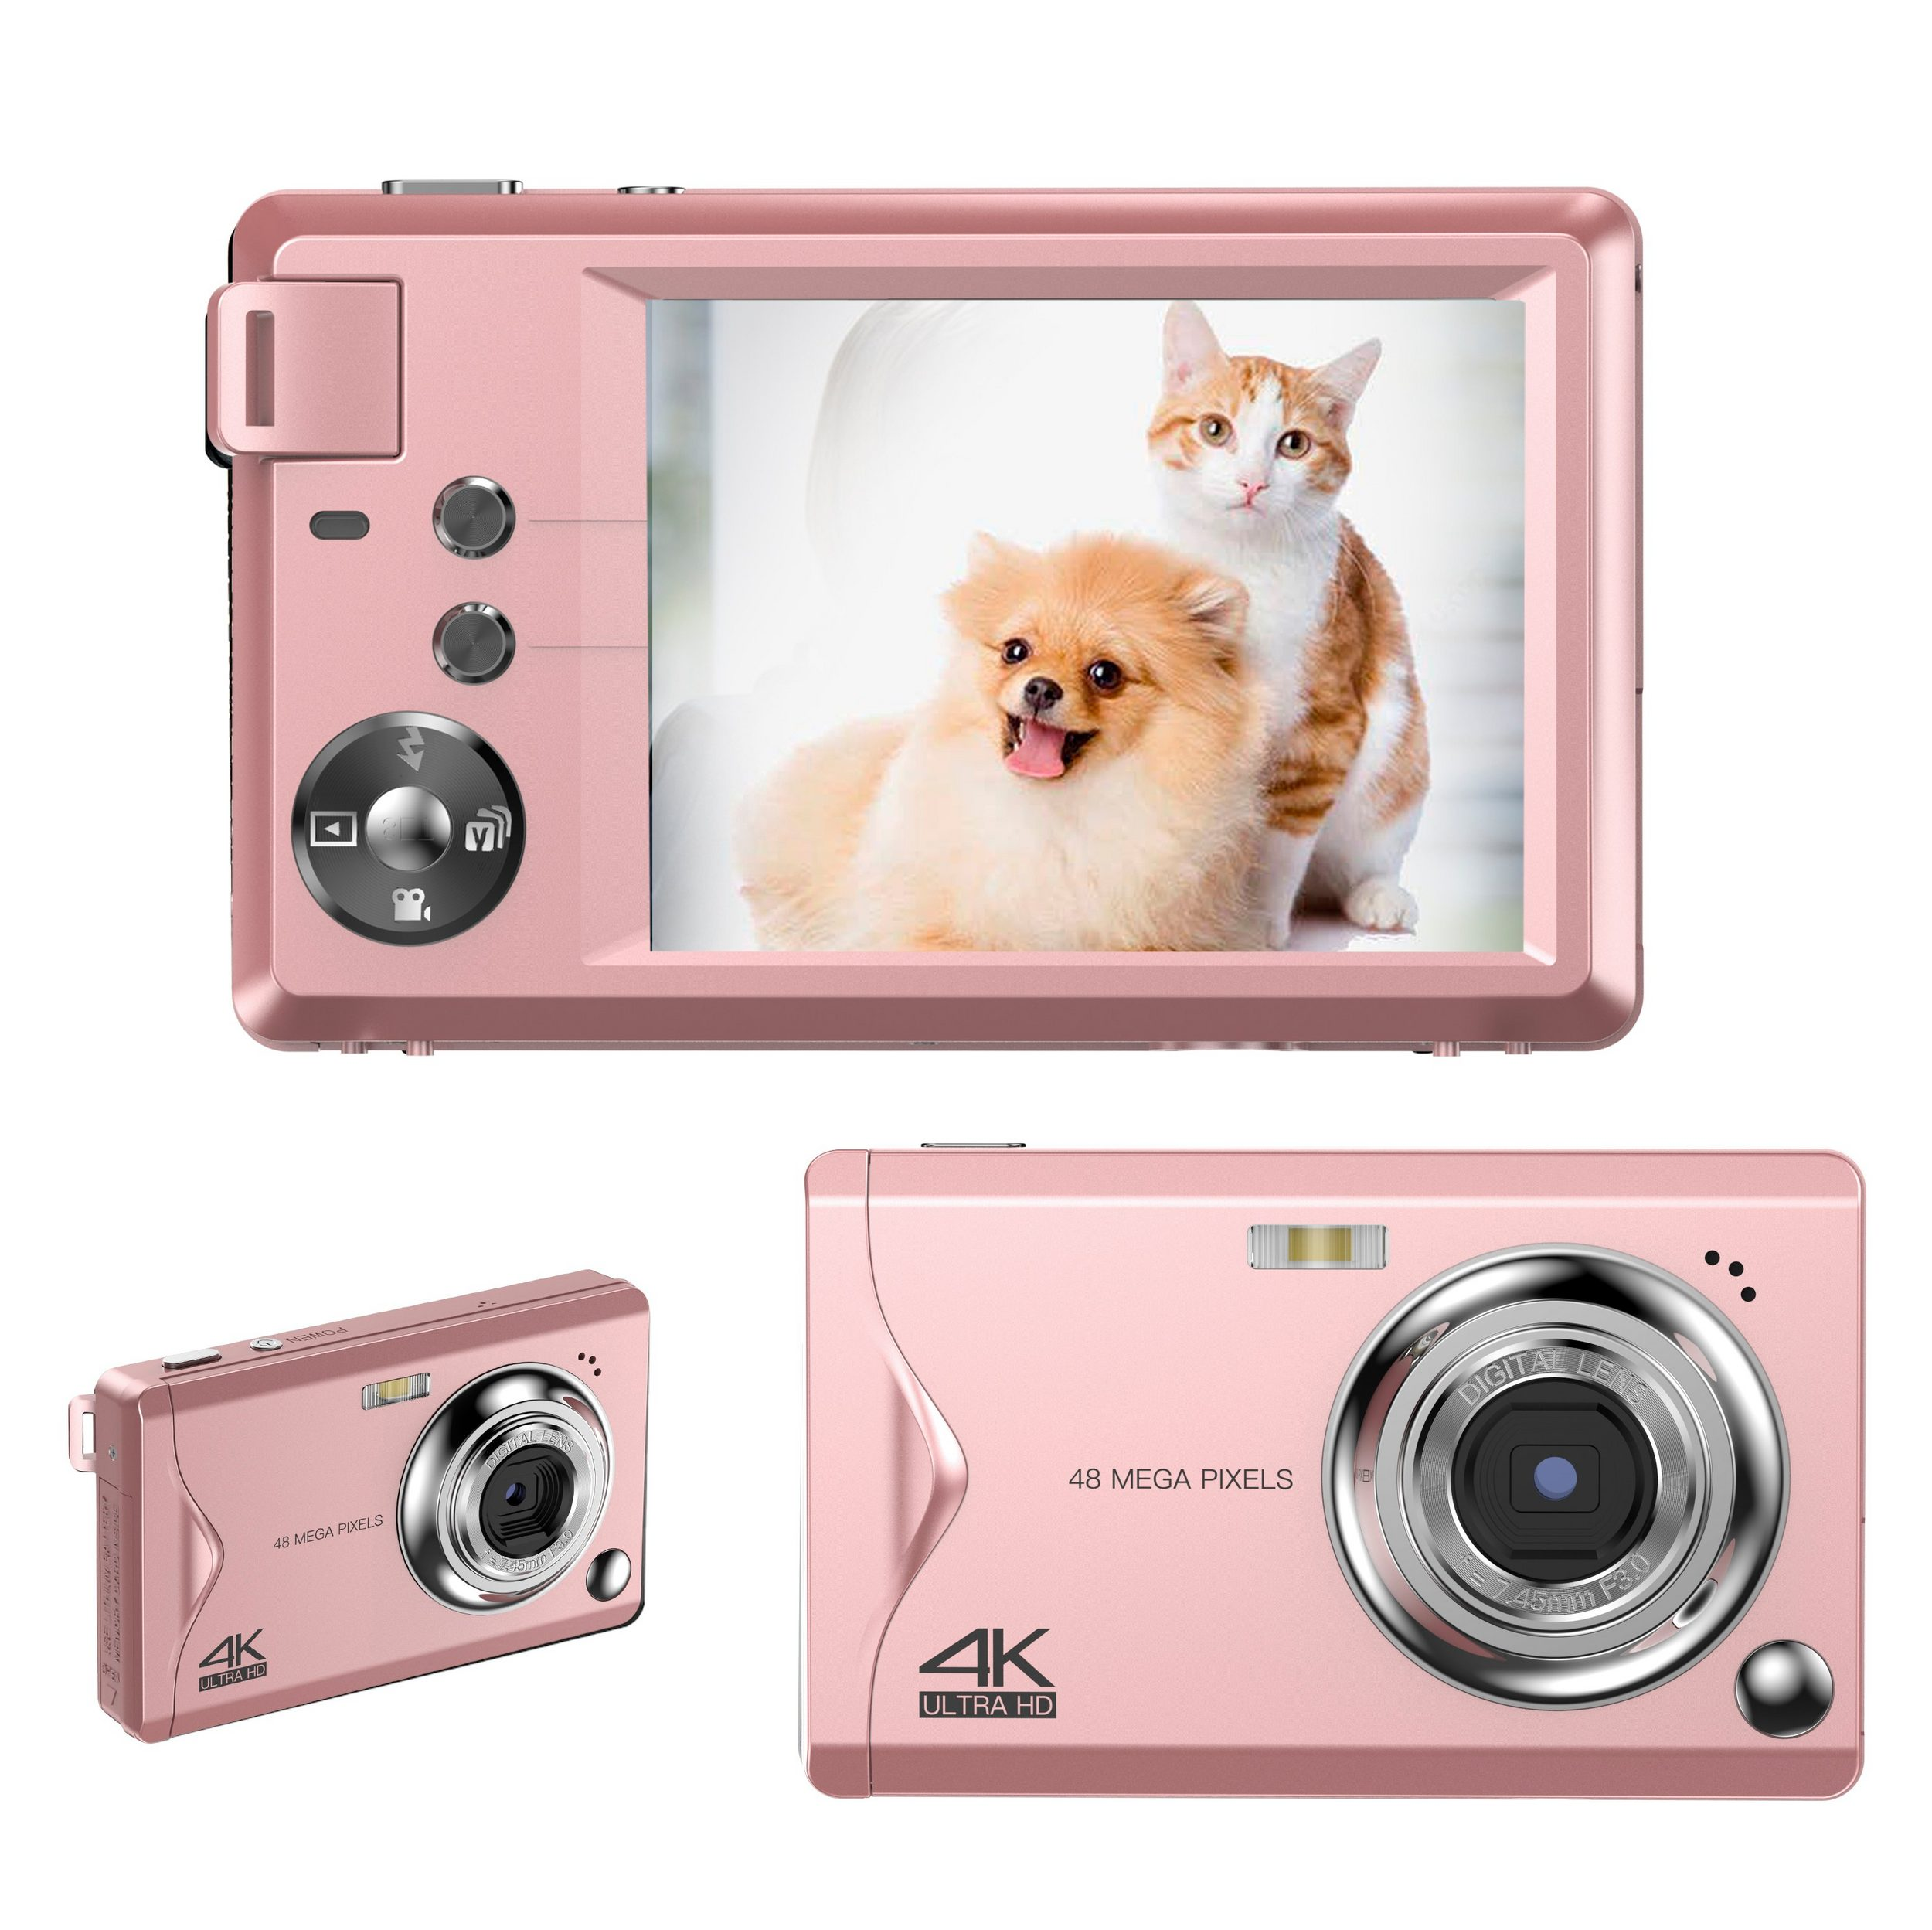 LINGDA Kompaktkamera, 16-facher Digitalzoom, 4K-Video, Kompaktkamera Digitalkamera Rosa- rosa 48-Megapixel-Sensor